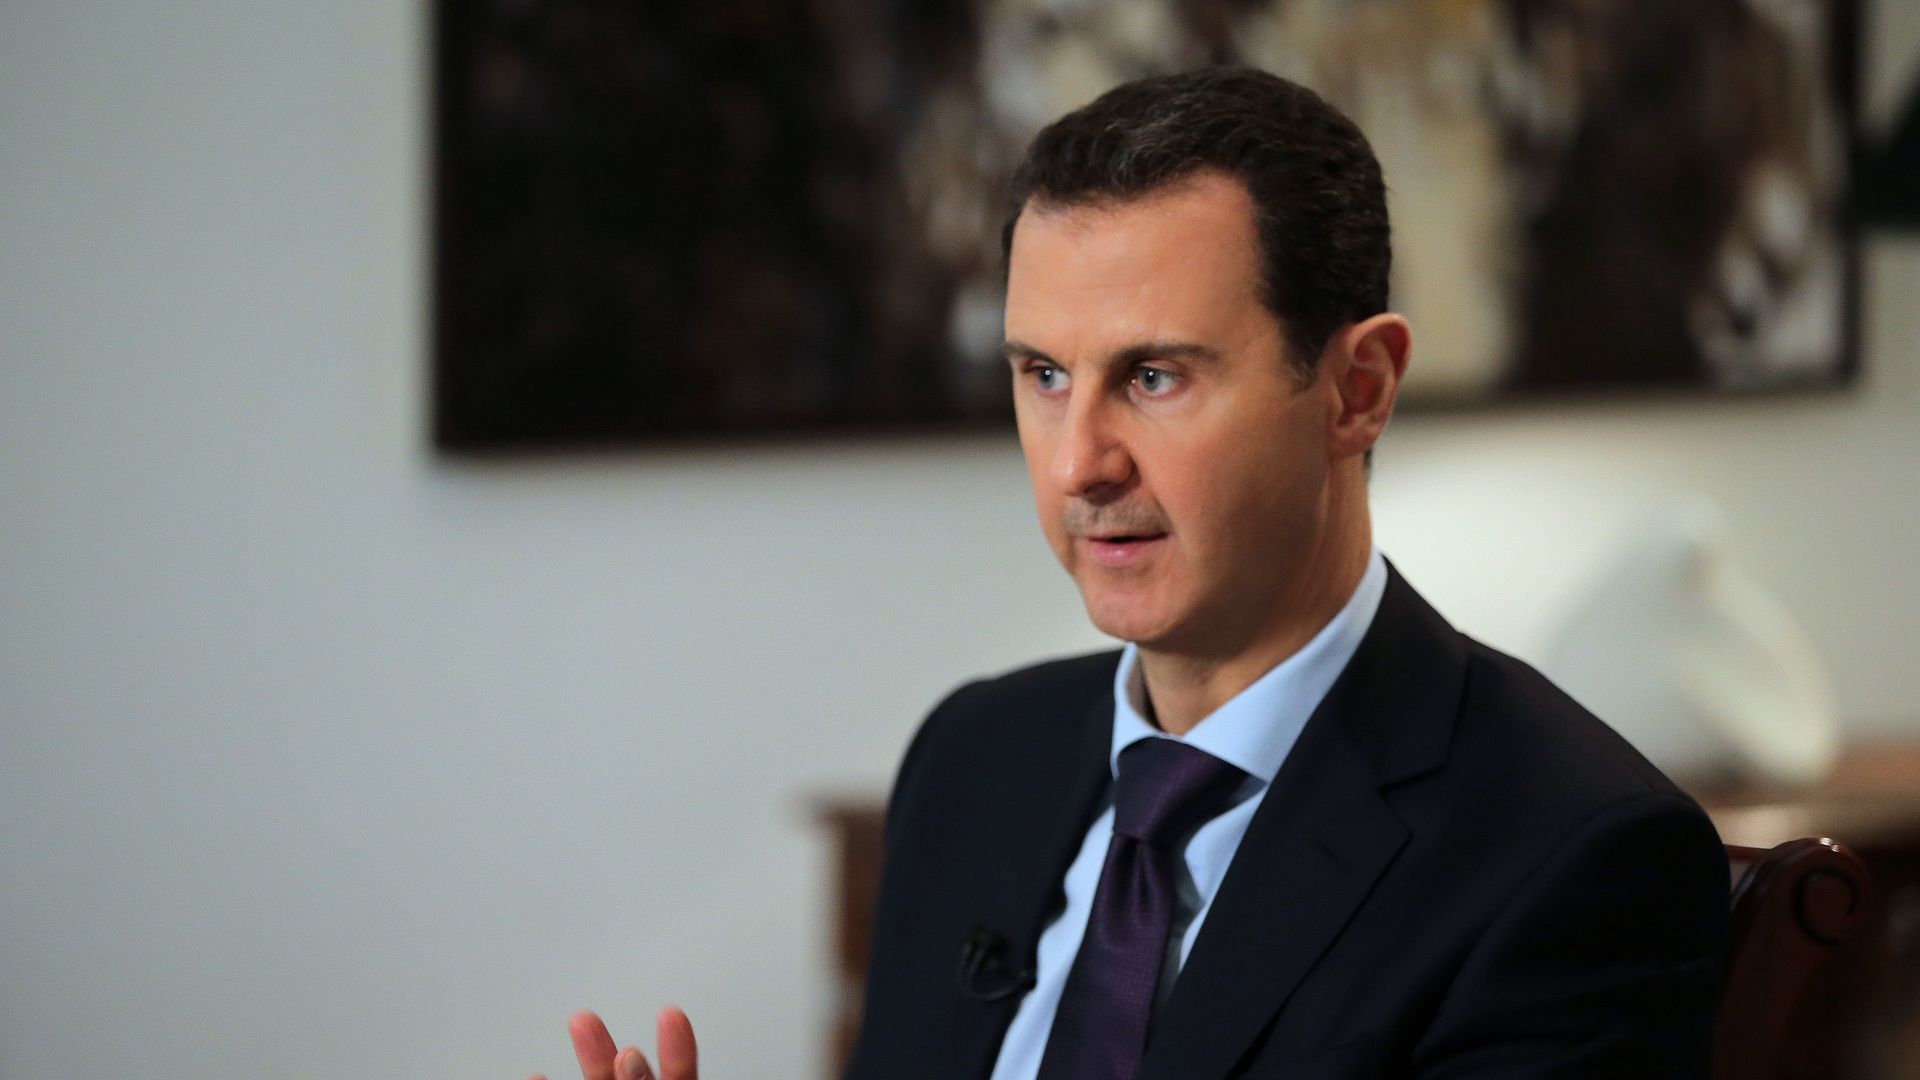 Syrian President Bashar al-Assad 